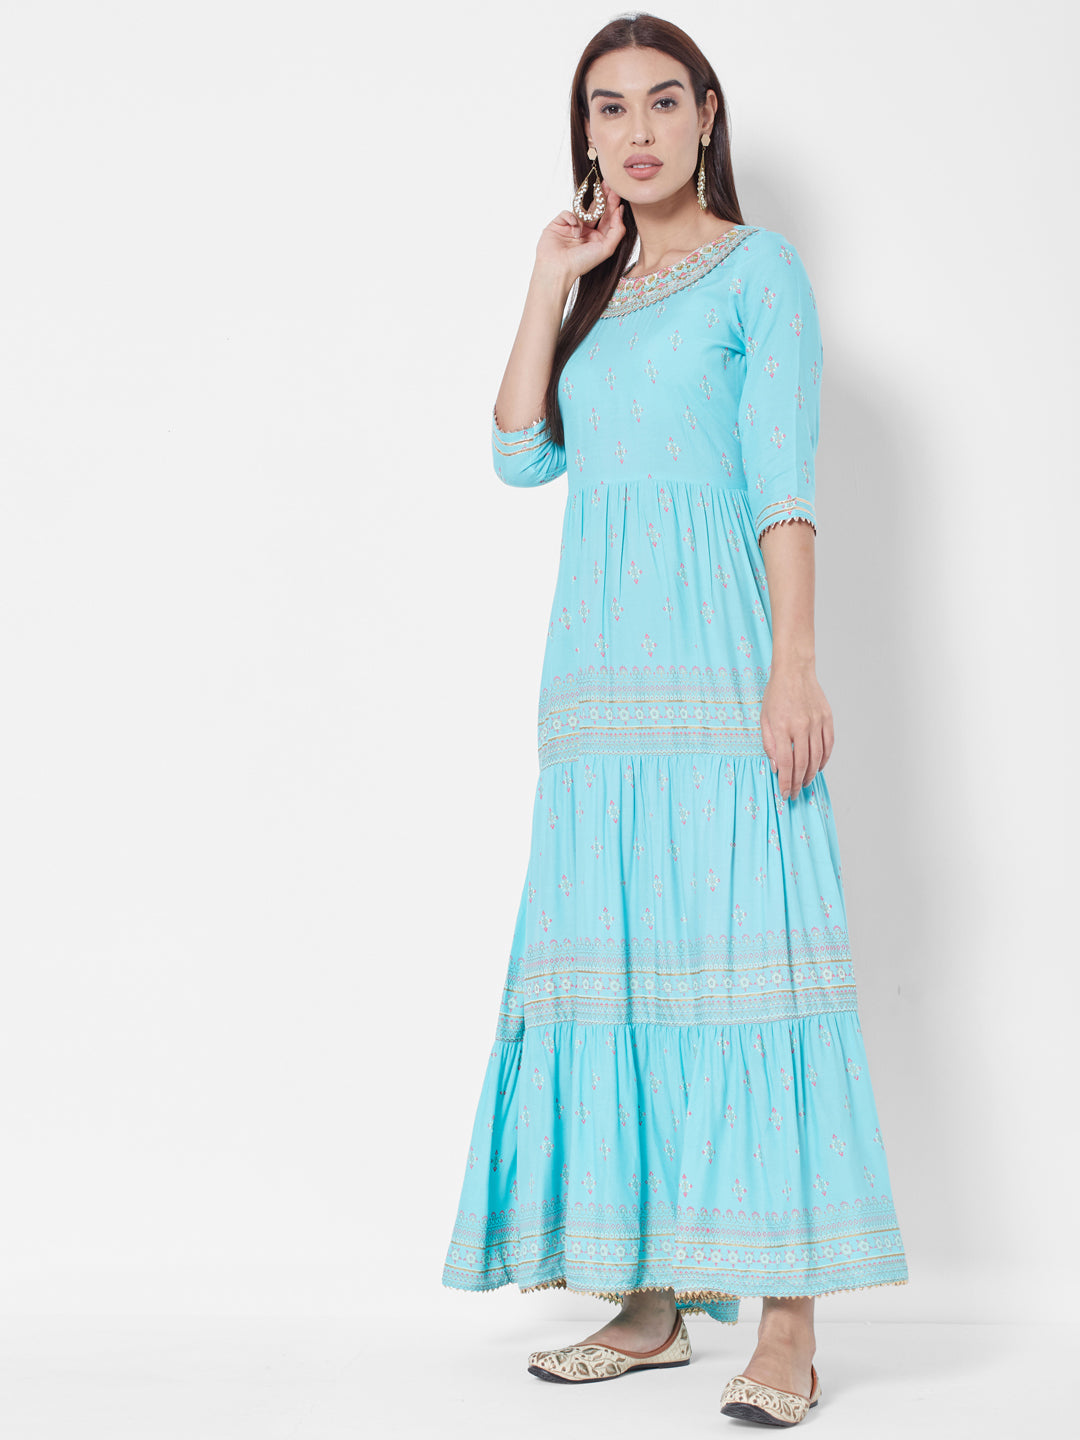 Vedic Blue Ethnic Motifs Printed Embroidered Gotta Patti Ethnic Maxi Dress